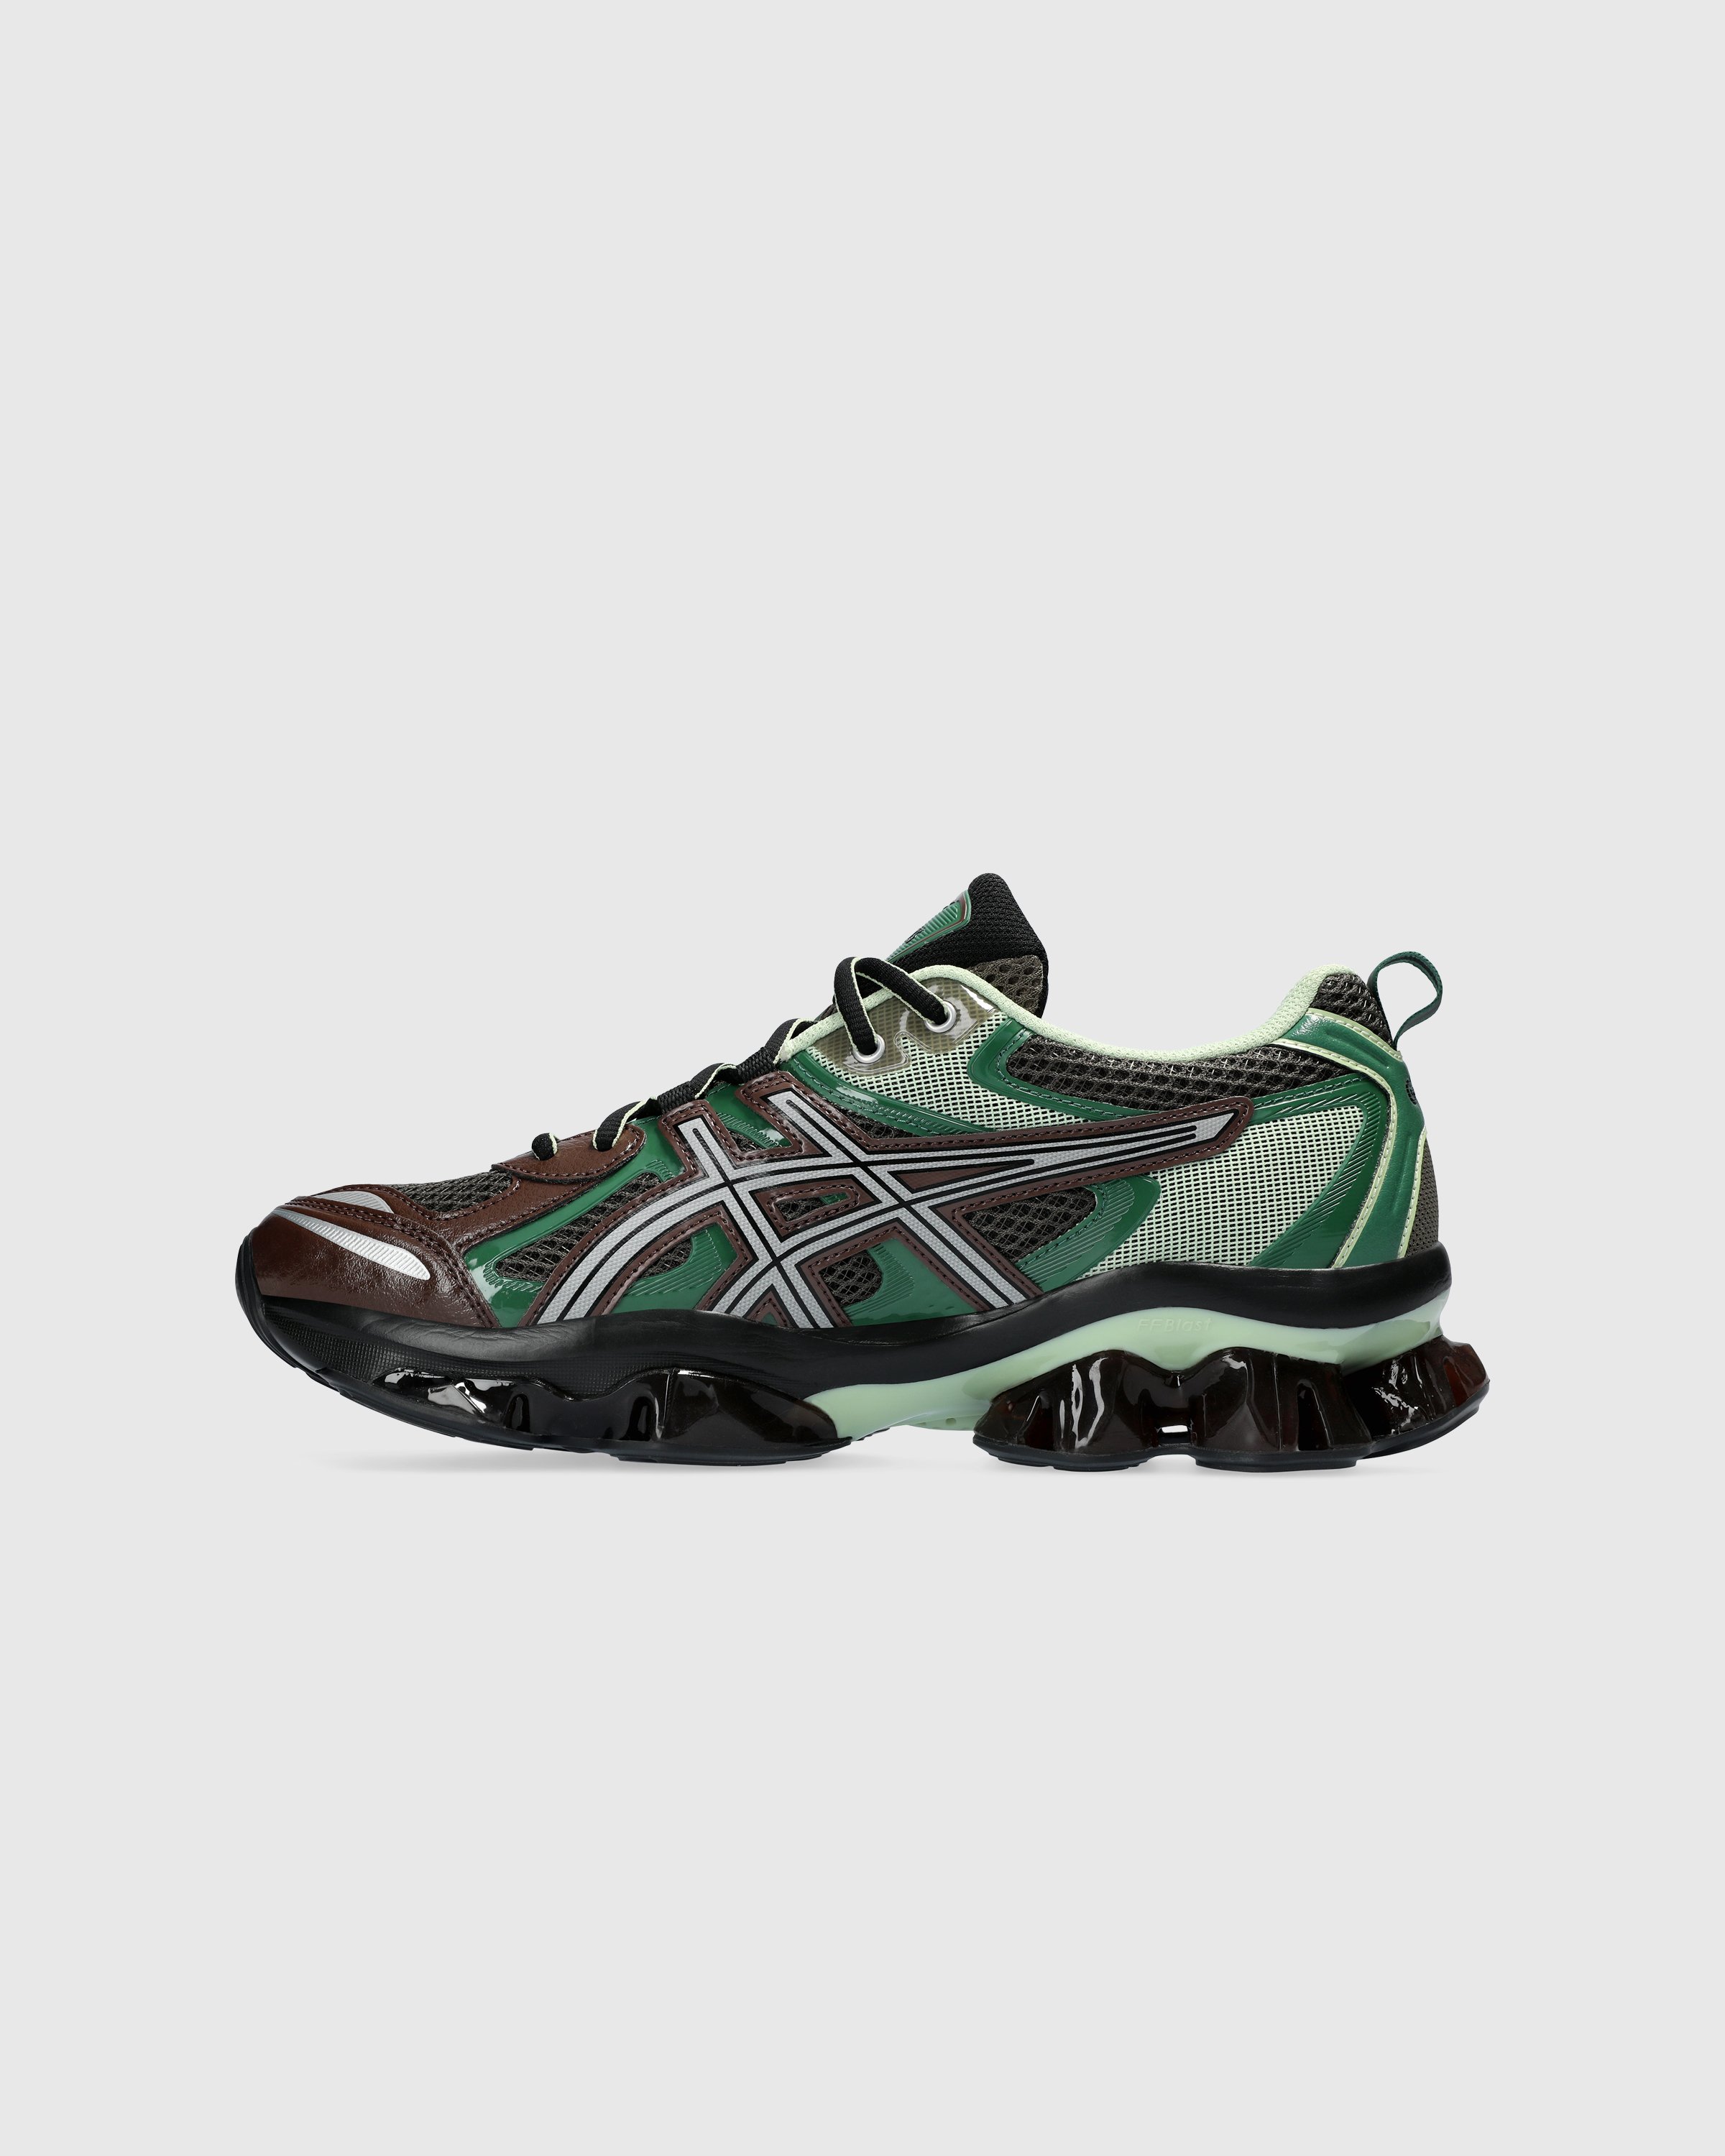 asics - GEL-QUANTUM KINETIC Dark Sepia/Shamrock Green - Footwear - Multi - Image 2